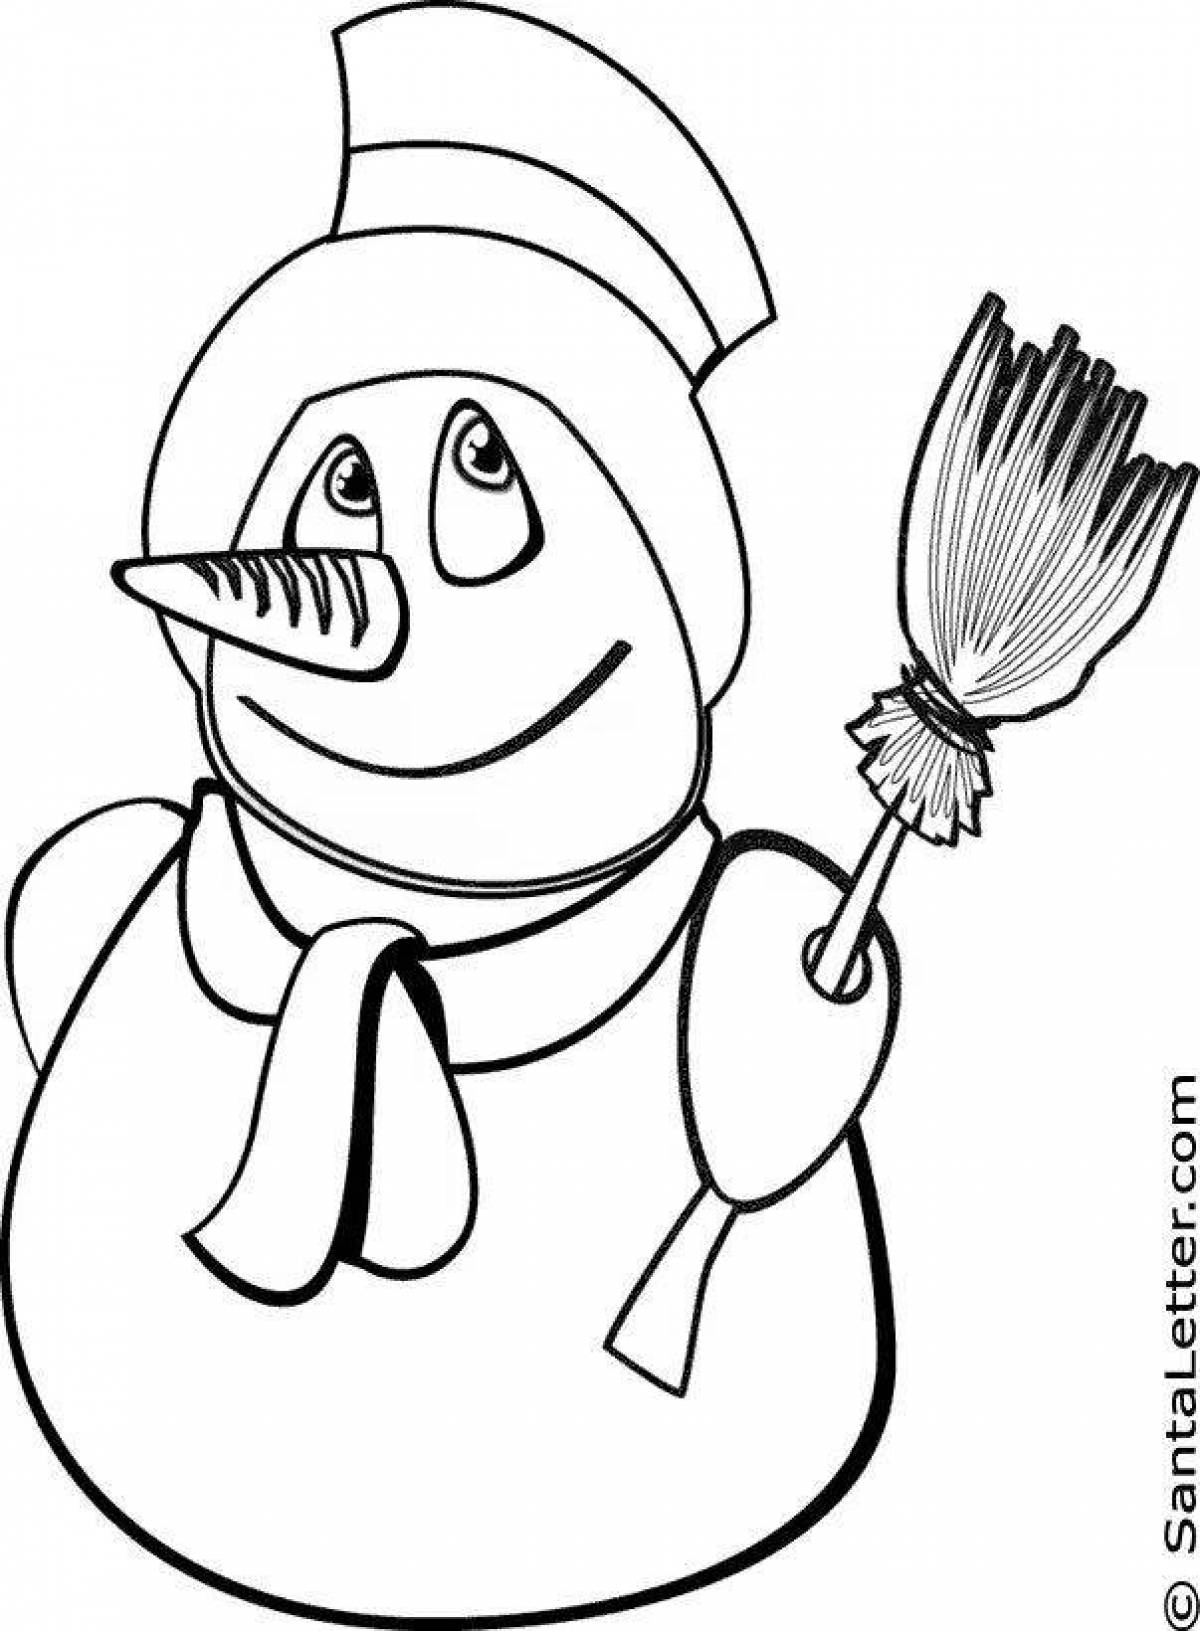 Expressive coloring funny snowman